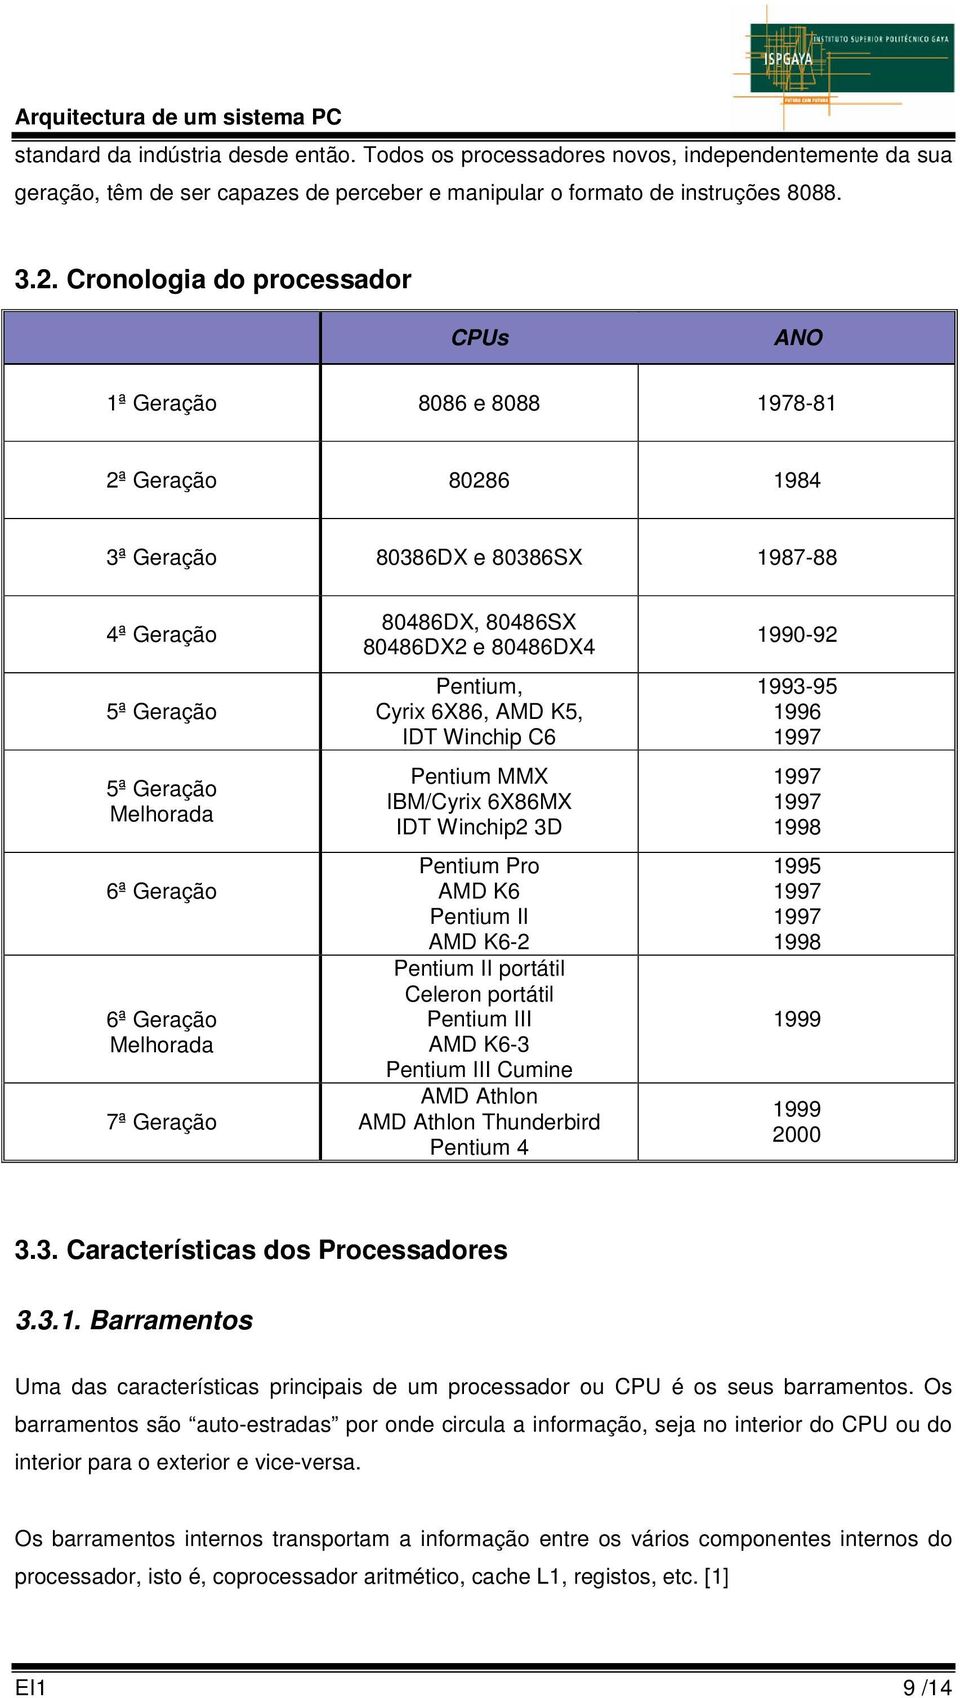 7ª Geração 80486DX, 80486SX 80486DX2 e 80486DX4 Pentium, Cyrix 6X86, AMD K5, IDT Winchip C6 Pentium MMX IBM/Cyrix 6X86MX IDT Winchip2 3D Pentium Pro AMD K6 Pentium II AMD K6-2 Pentium II portátil